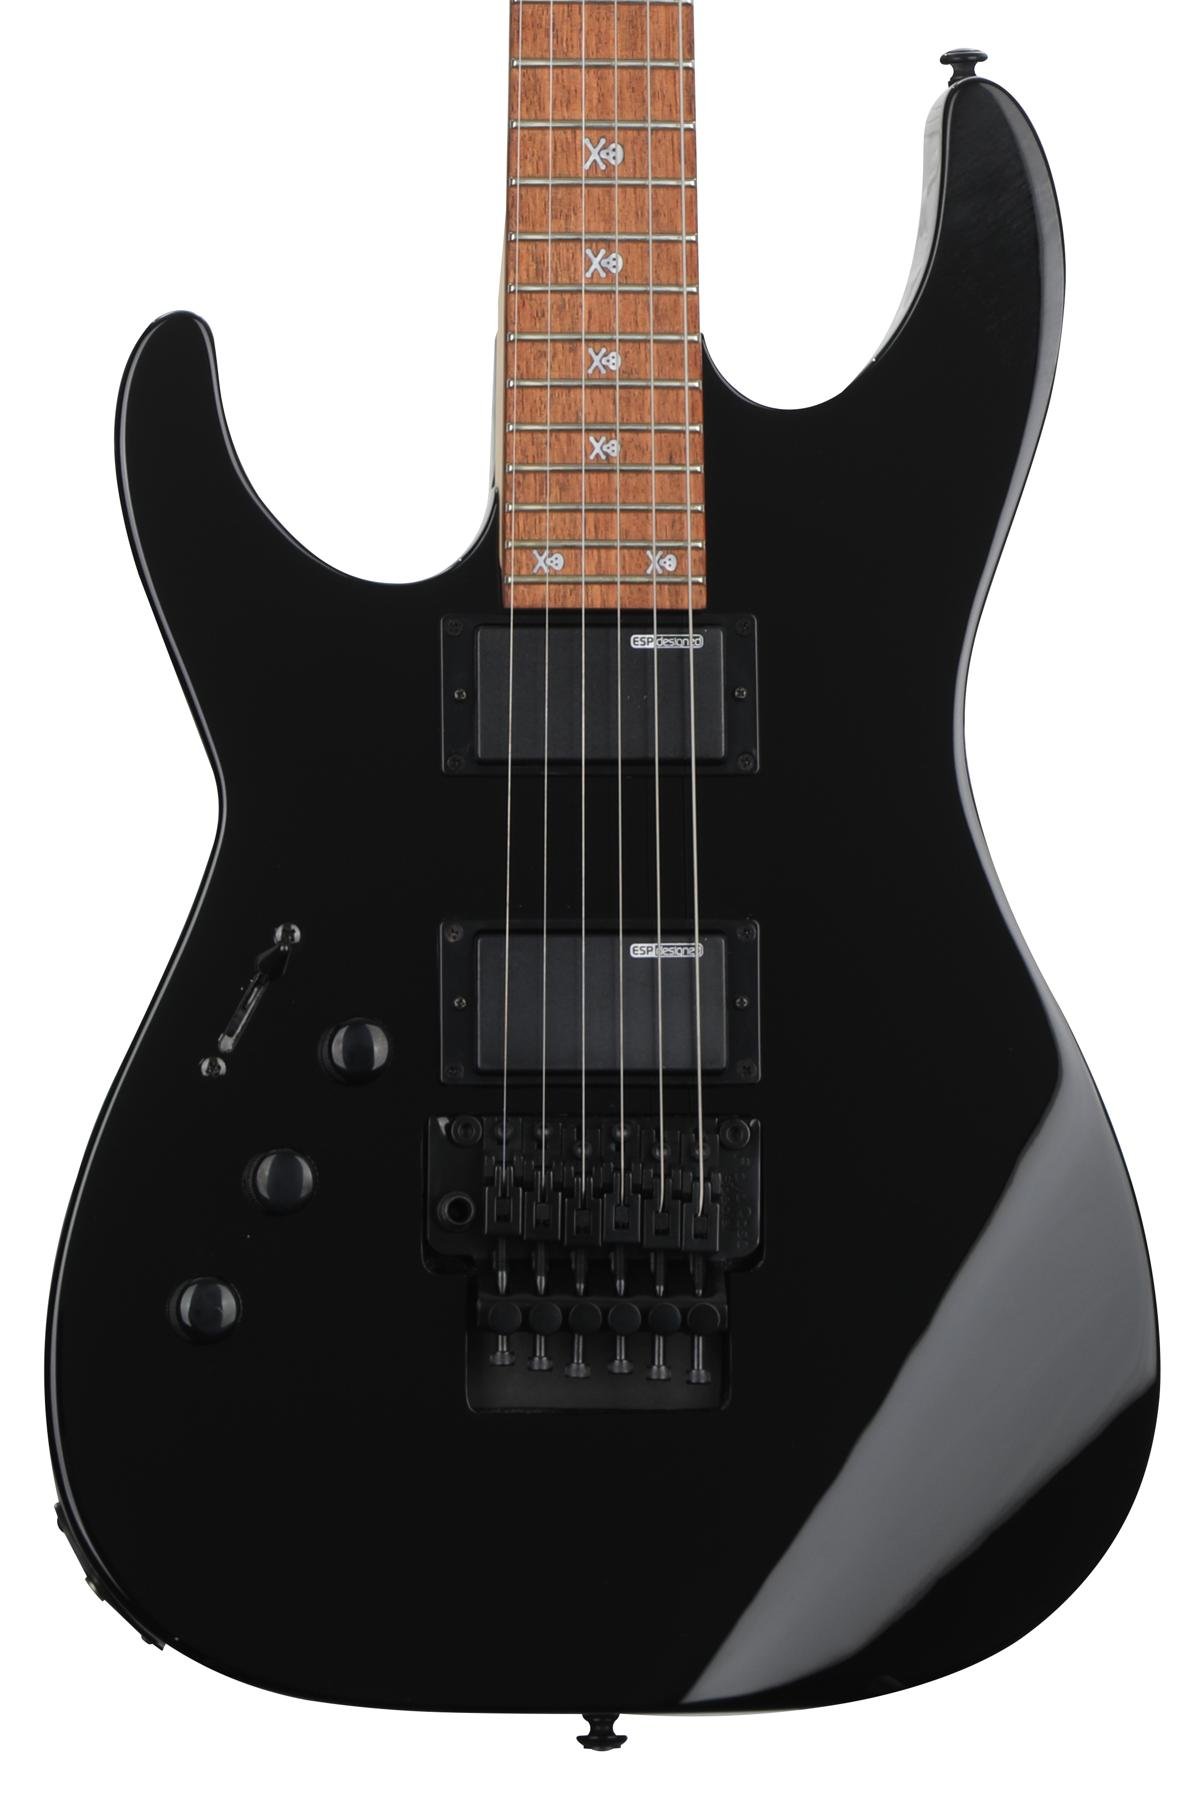 ESP LTD Kirk Hammett Signature KH-202 Left-handed - Black | Sweetwater